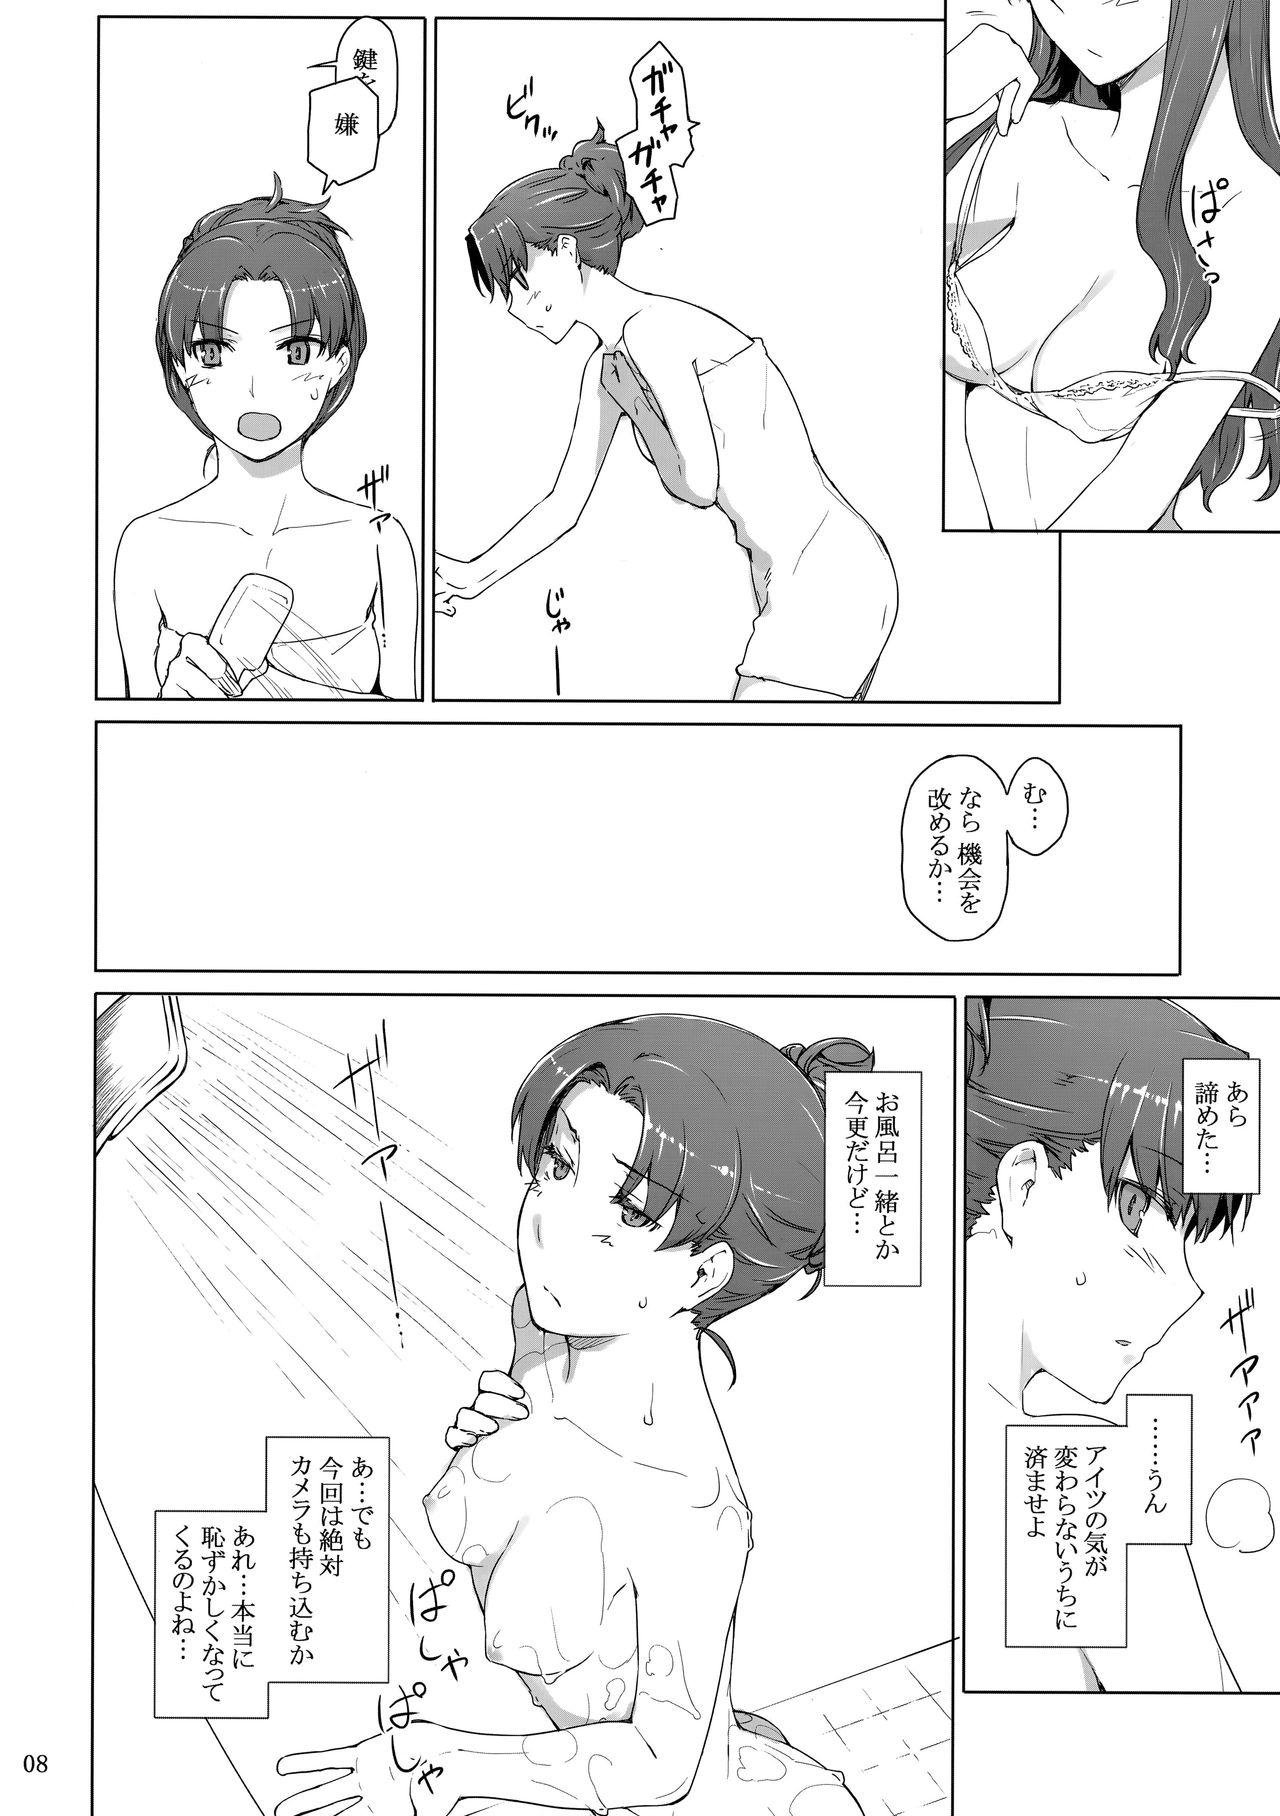 Toilet Tosaka-ke no Kakei Jijou 10 - Fate stay night Harcore - Page 7